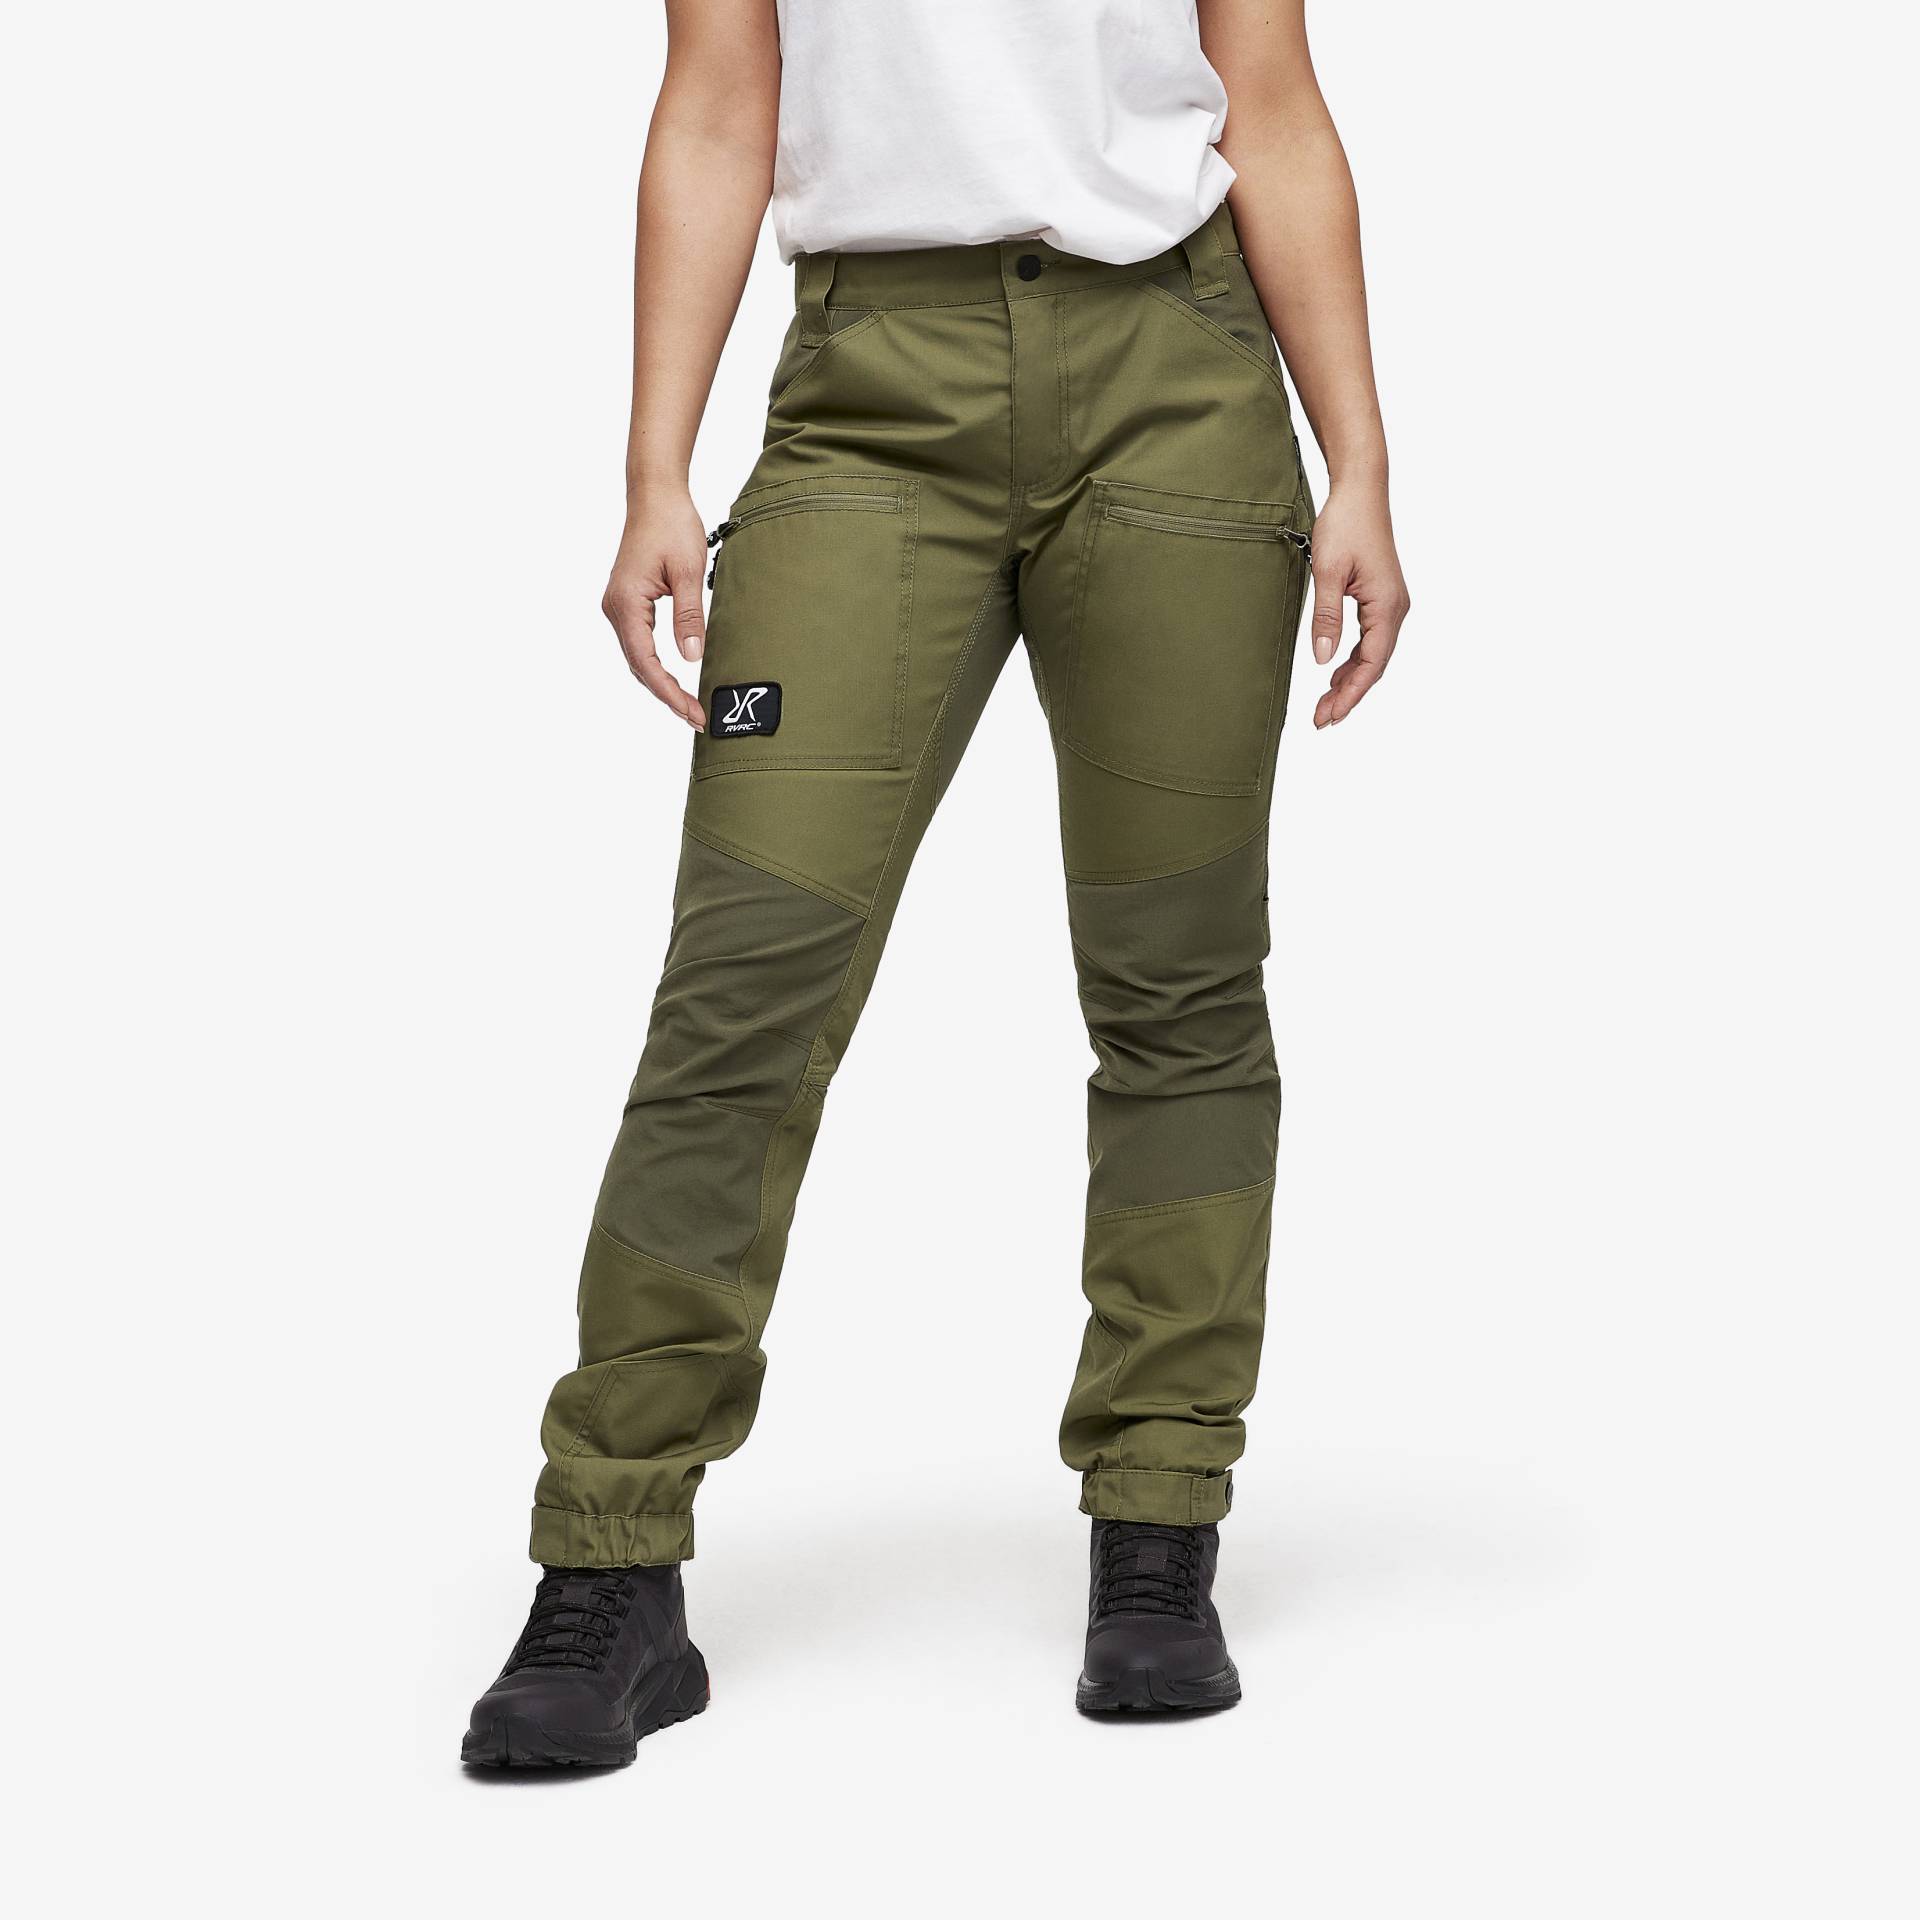 Nordwand Pro Pants Damen Burnt Olive, Größe:L - Outdoorhose, Wanderhose & Trekkinghose von RevolutionRace